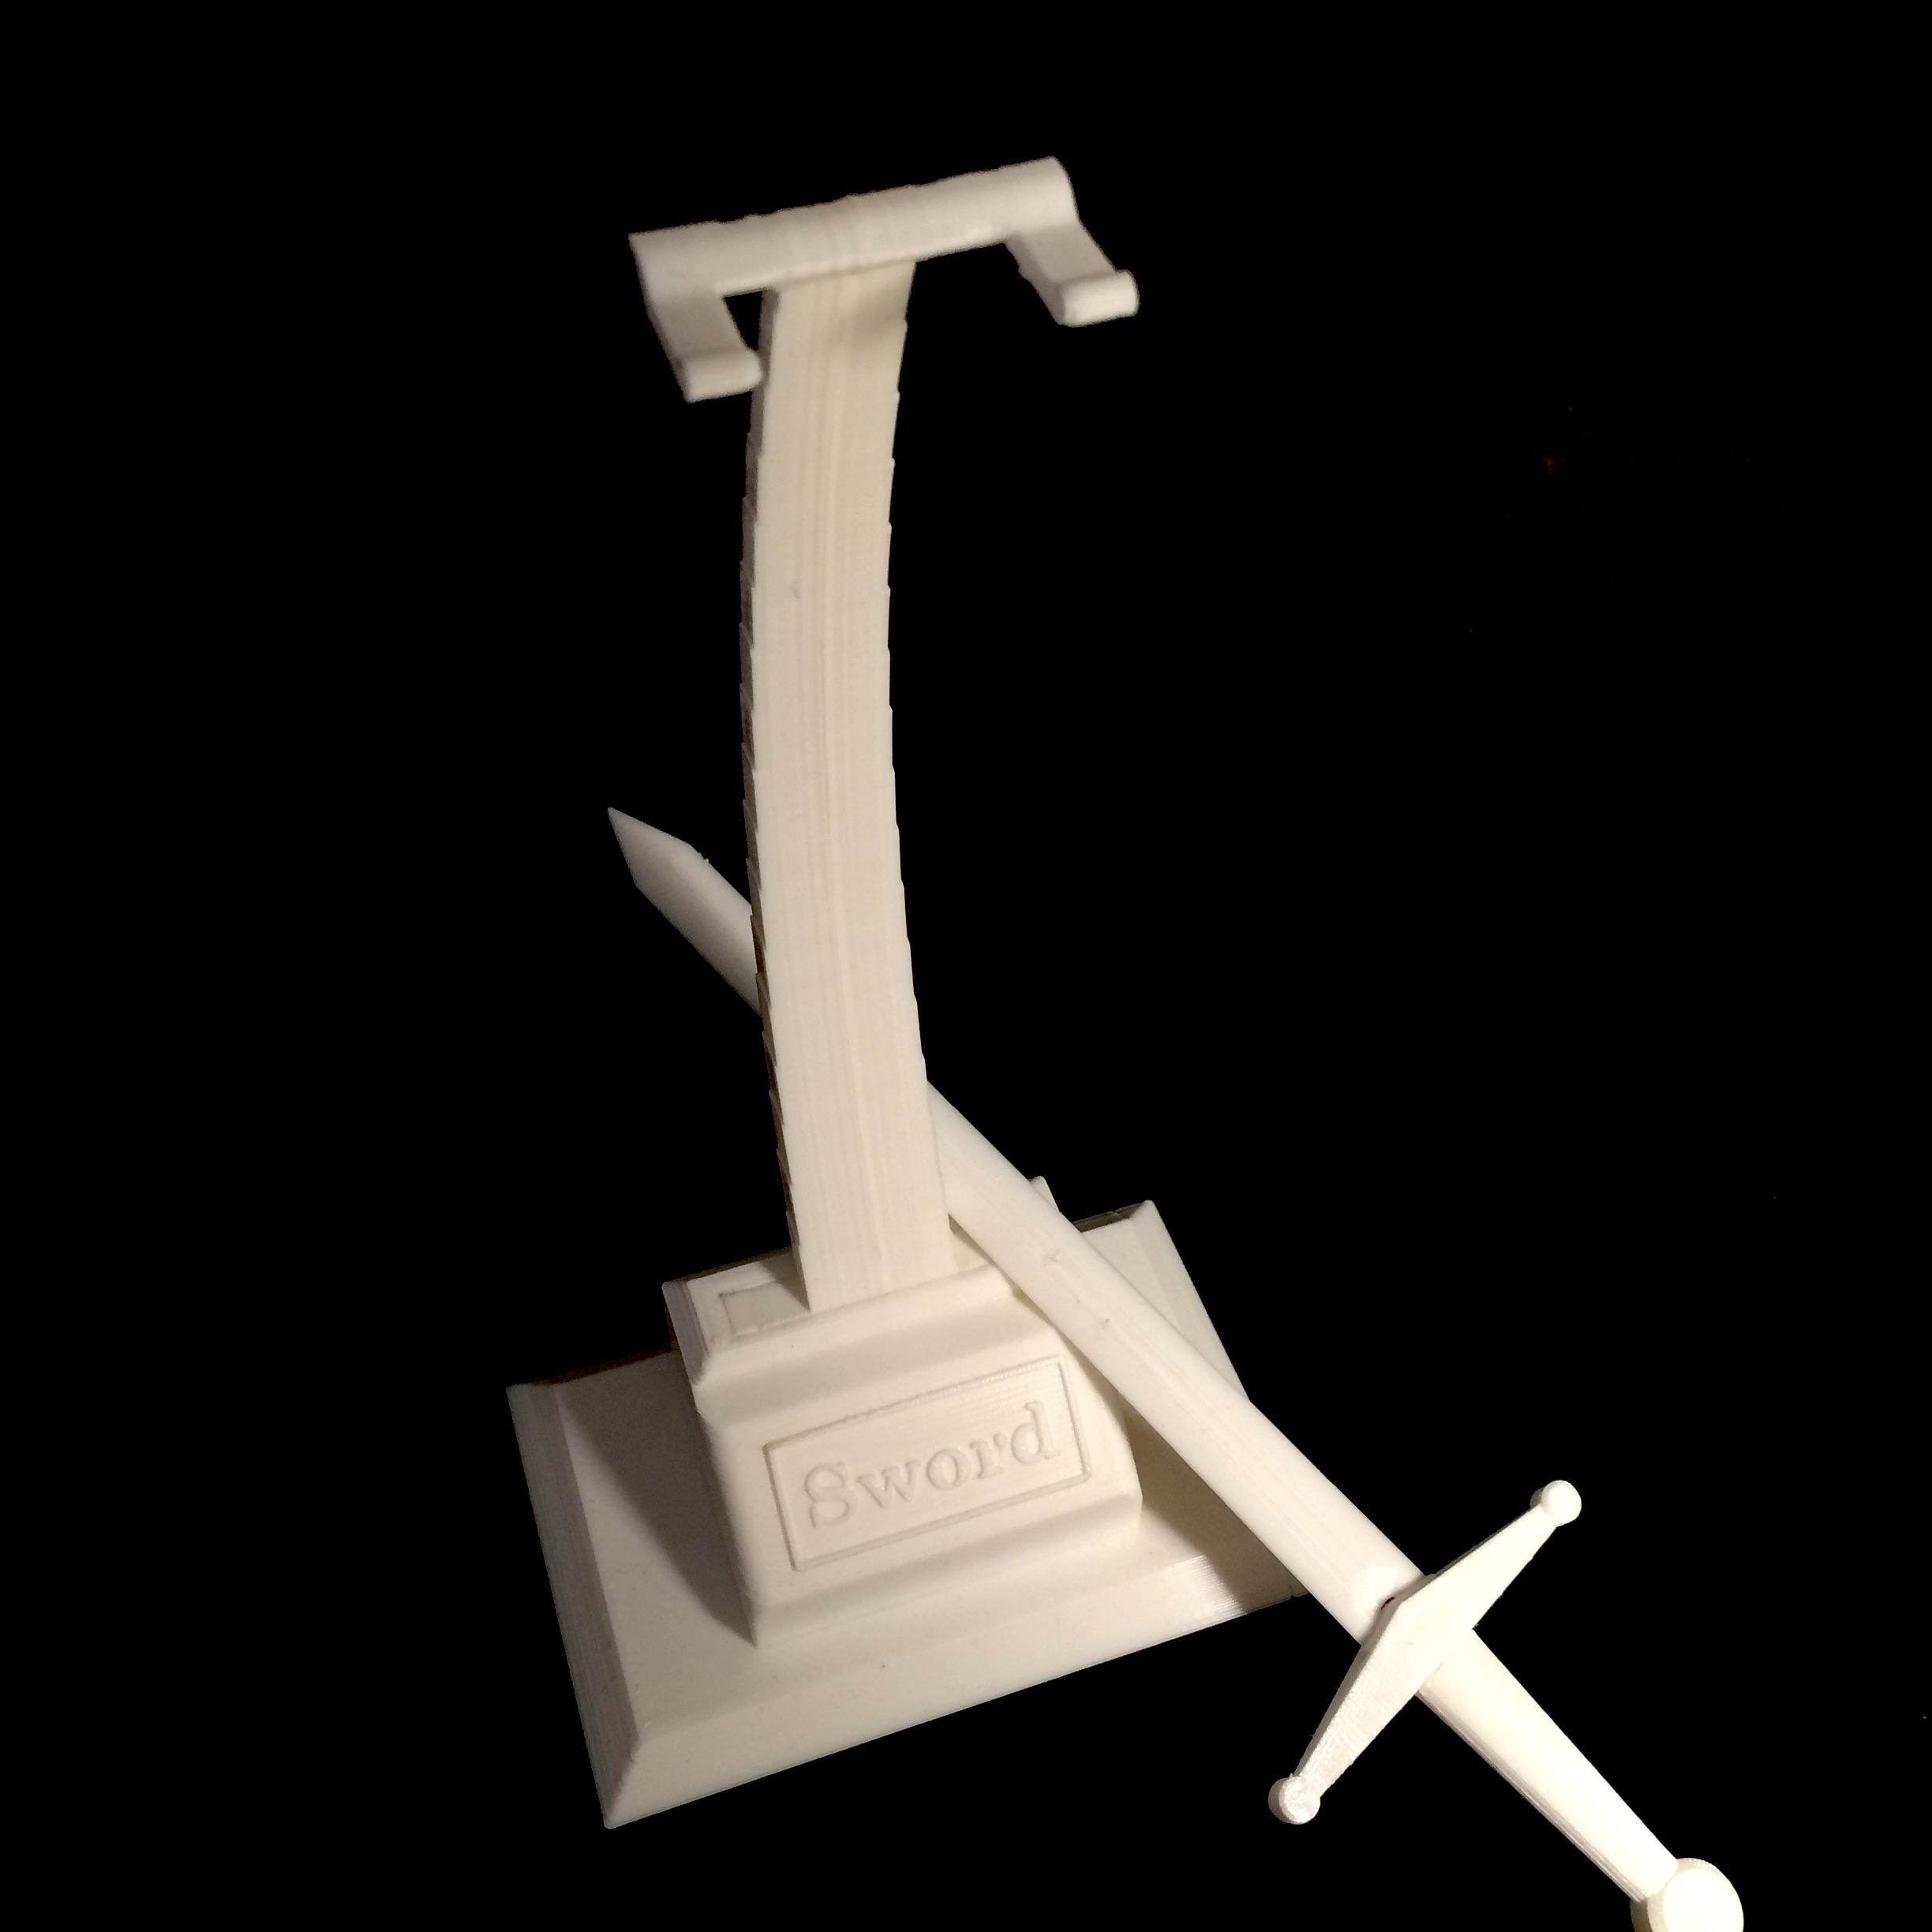 Model sword image